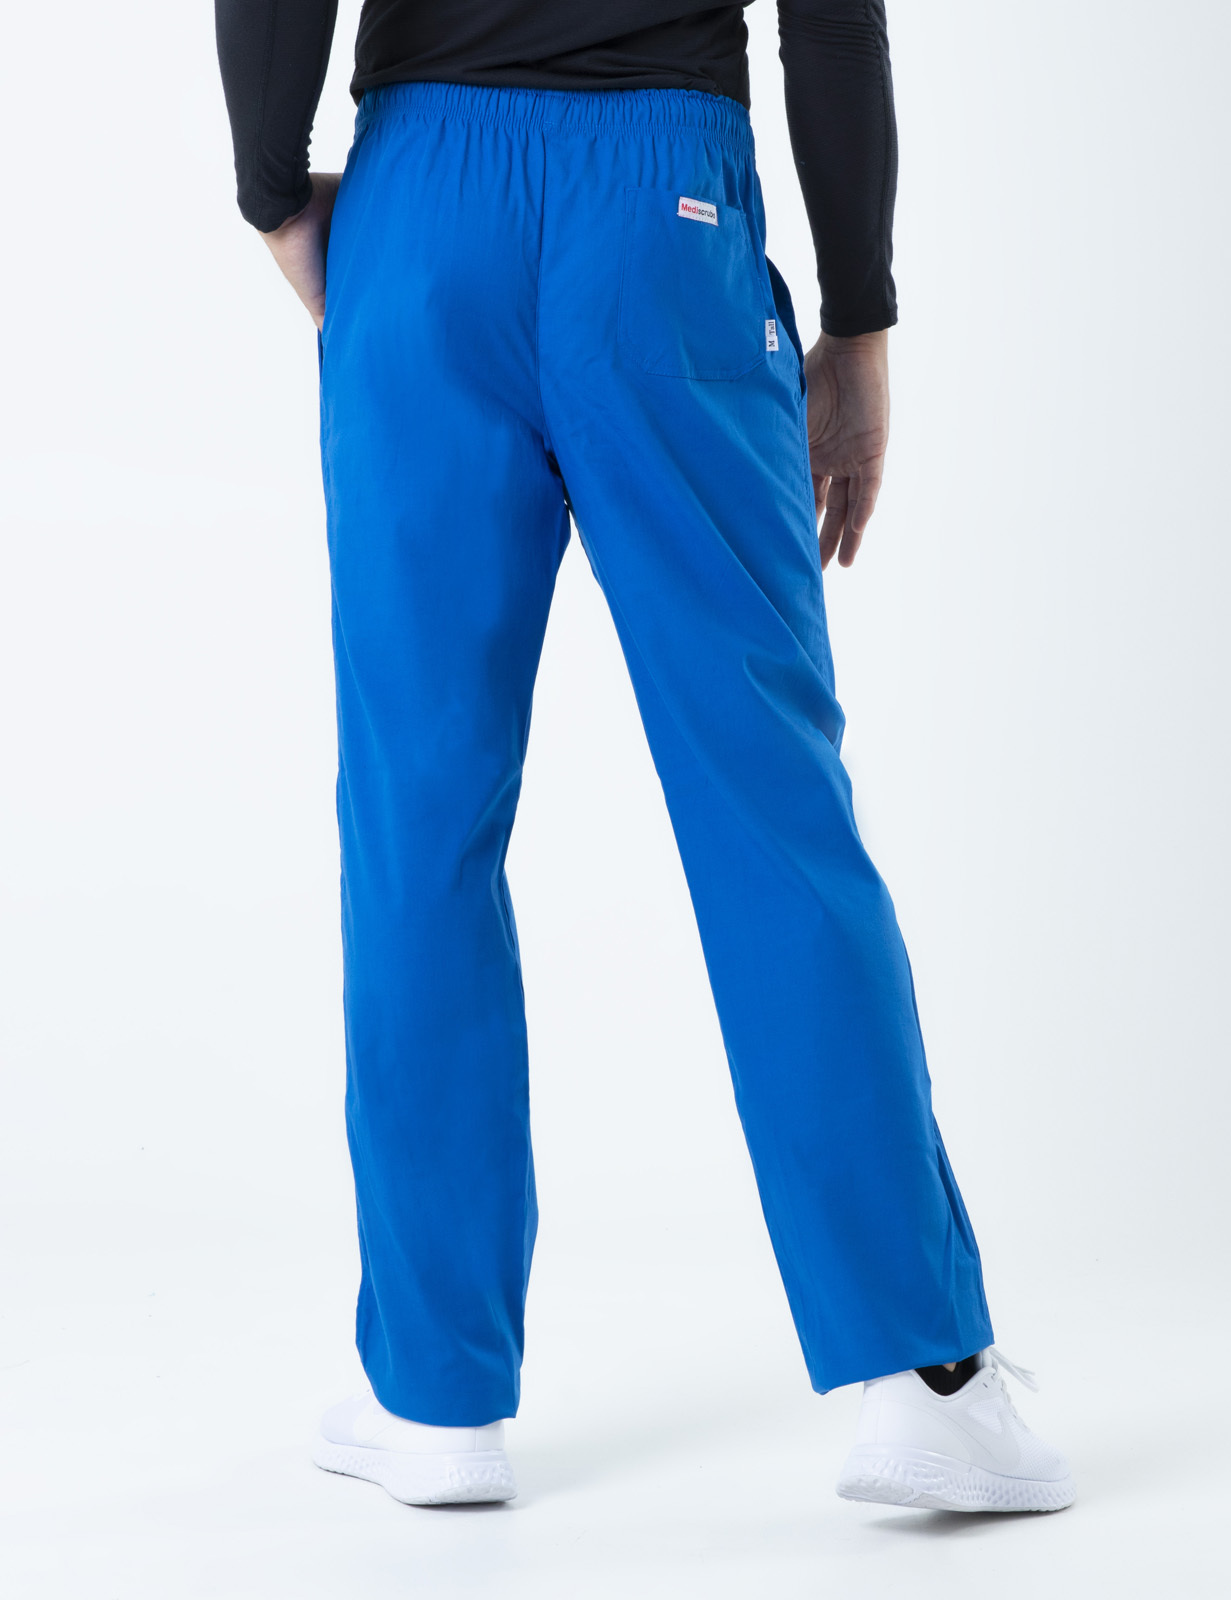 Men's Regular Cut Pants - Royal - 4X large